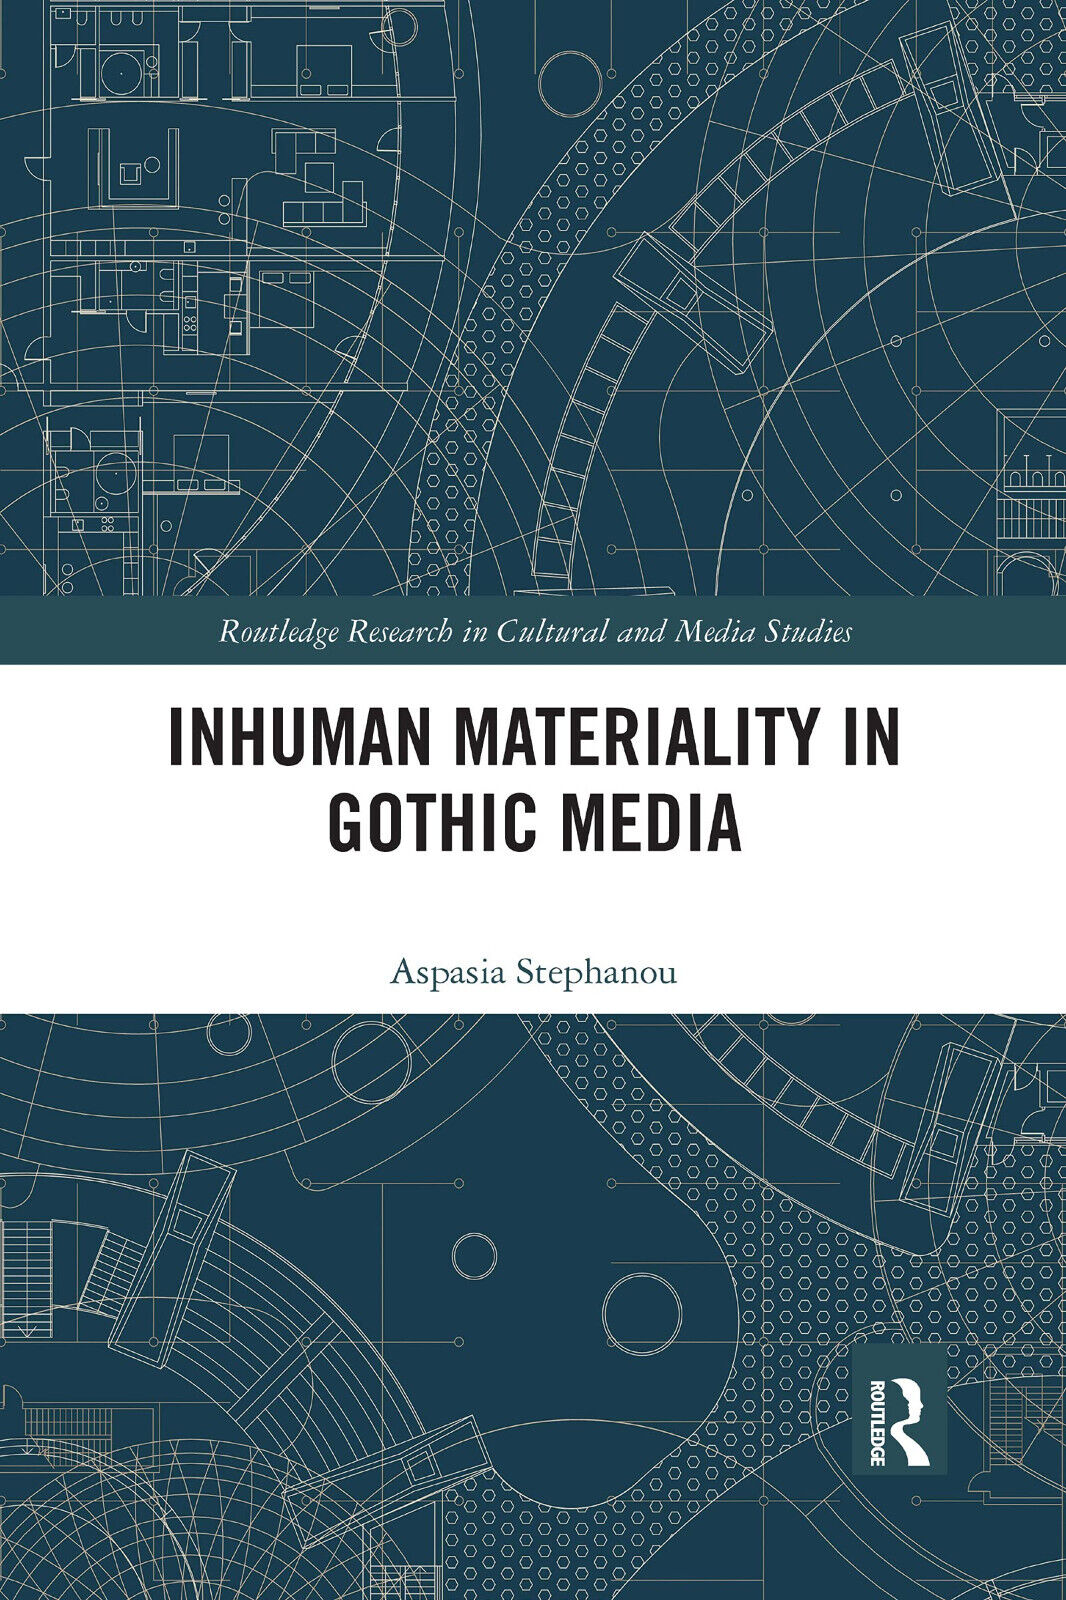 Inhuman Materiality In Gothic Media - Aspasia Stephanou - Routledge, 2021